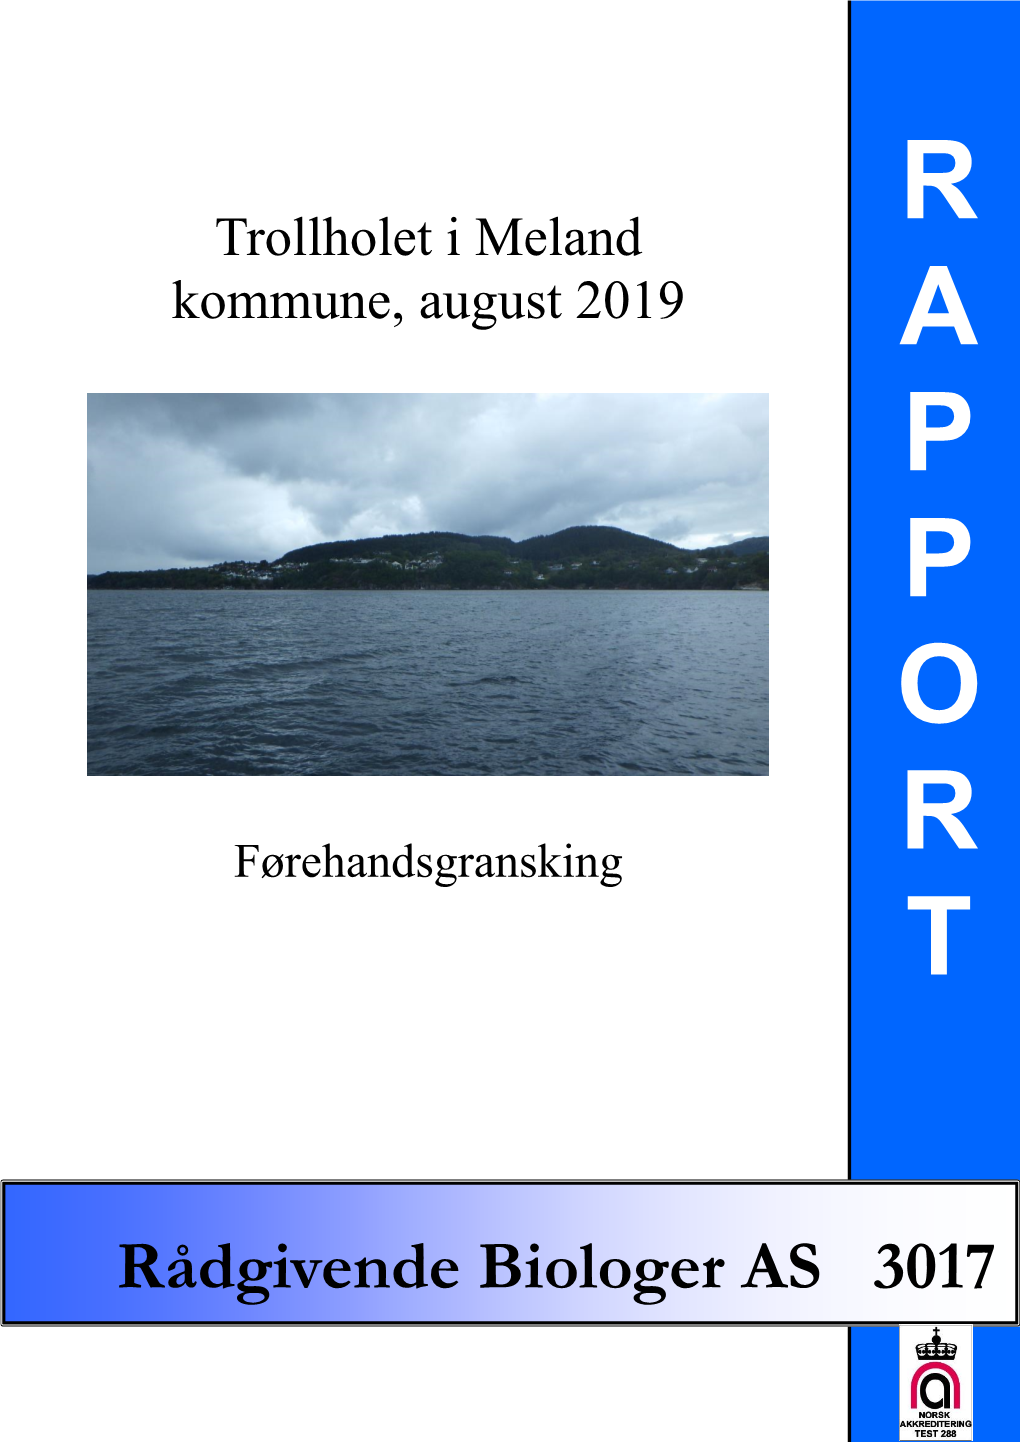 Trollholet I Meland Kommune, August 2019